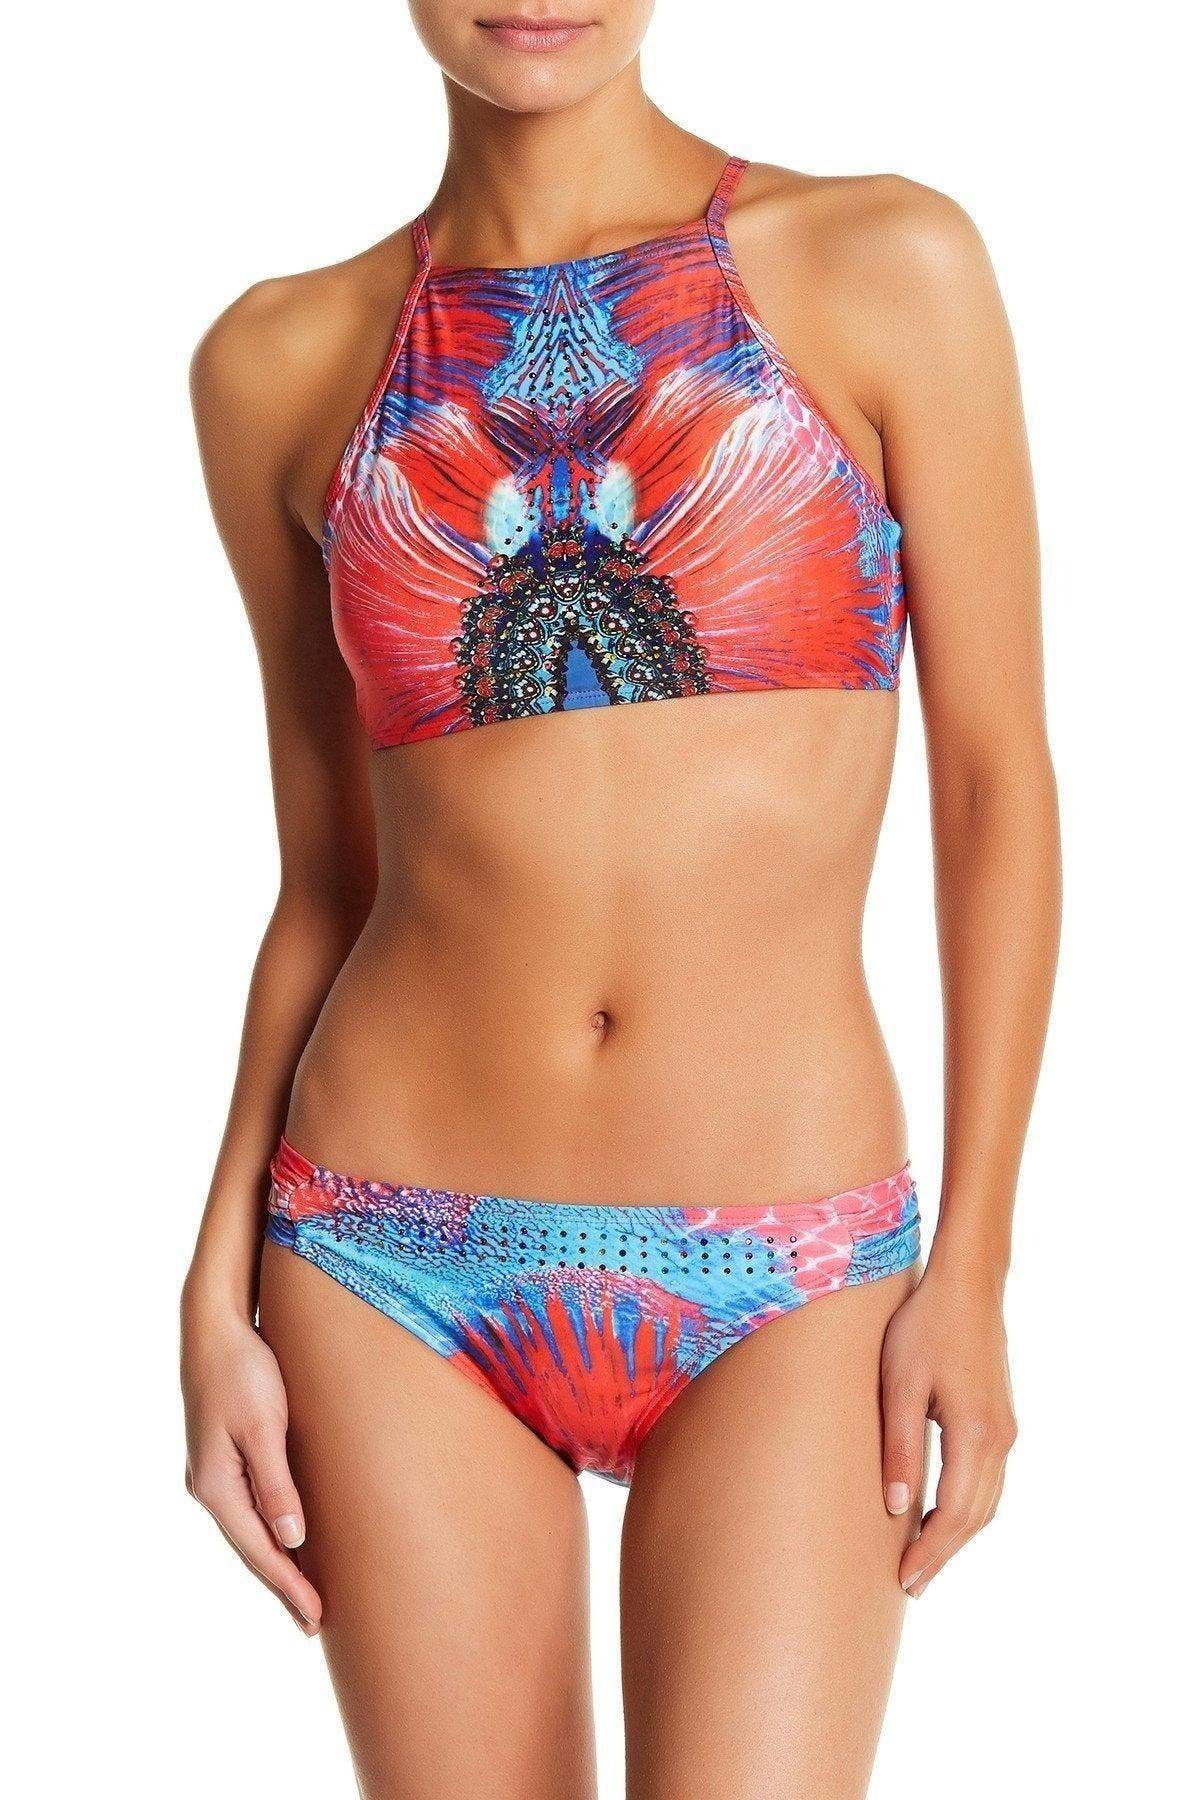 Two Piece Bikini Sets for Women Halter String Bikini Set cheap